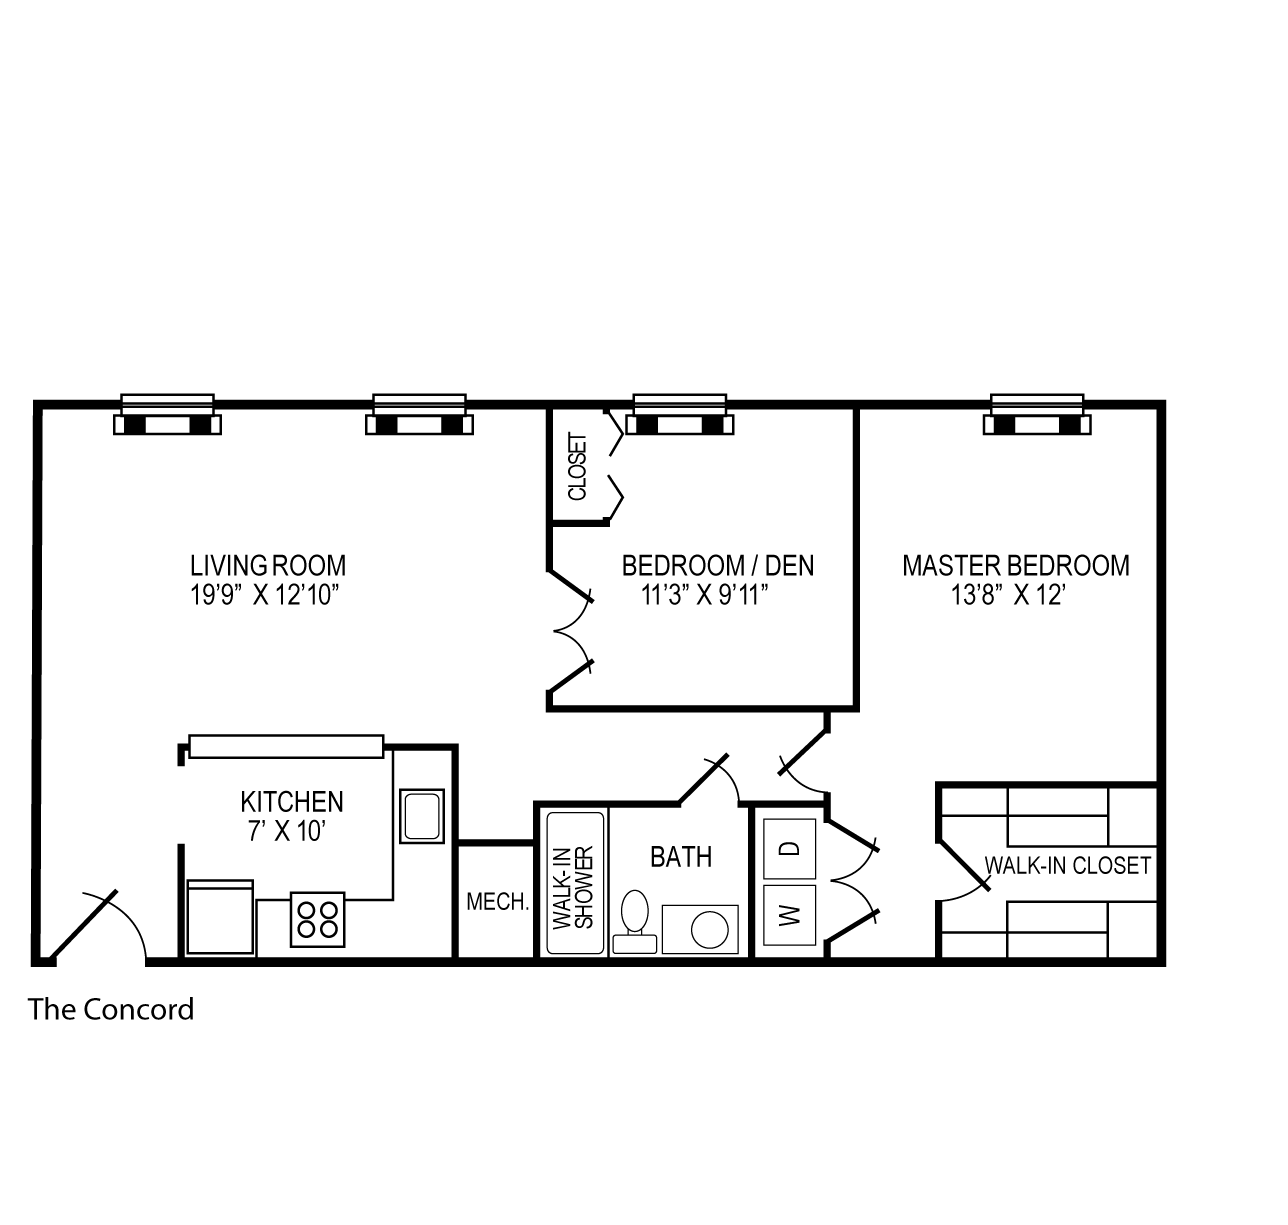 The Concord 2 bedroom apartment floorplan